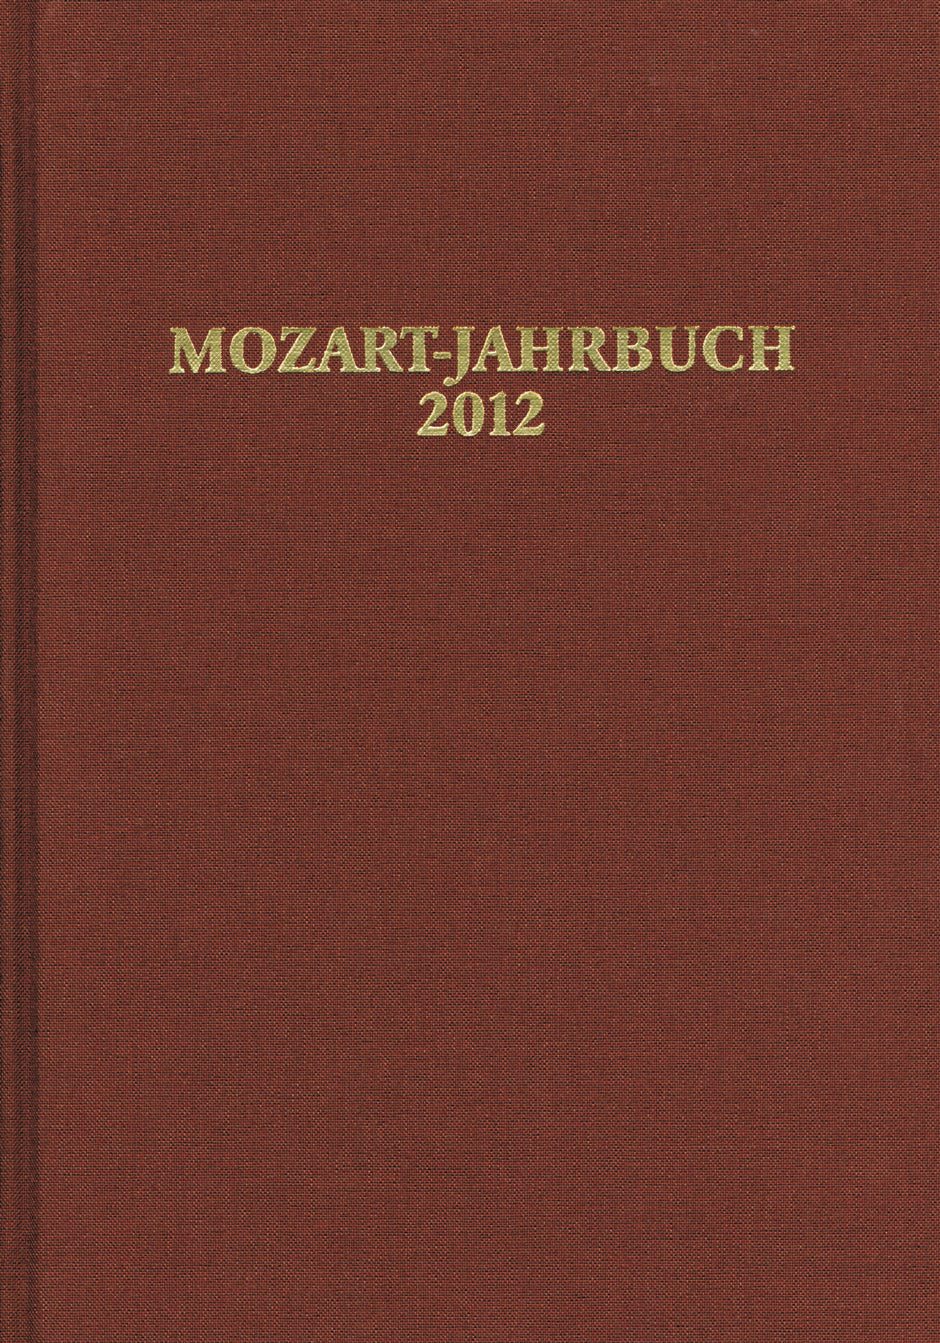 Mozart-Jahrbuch 2012